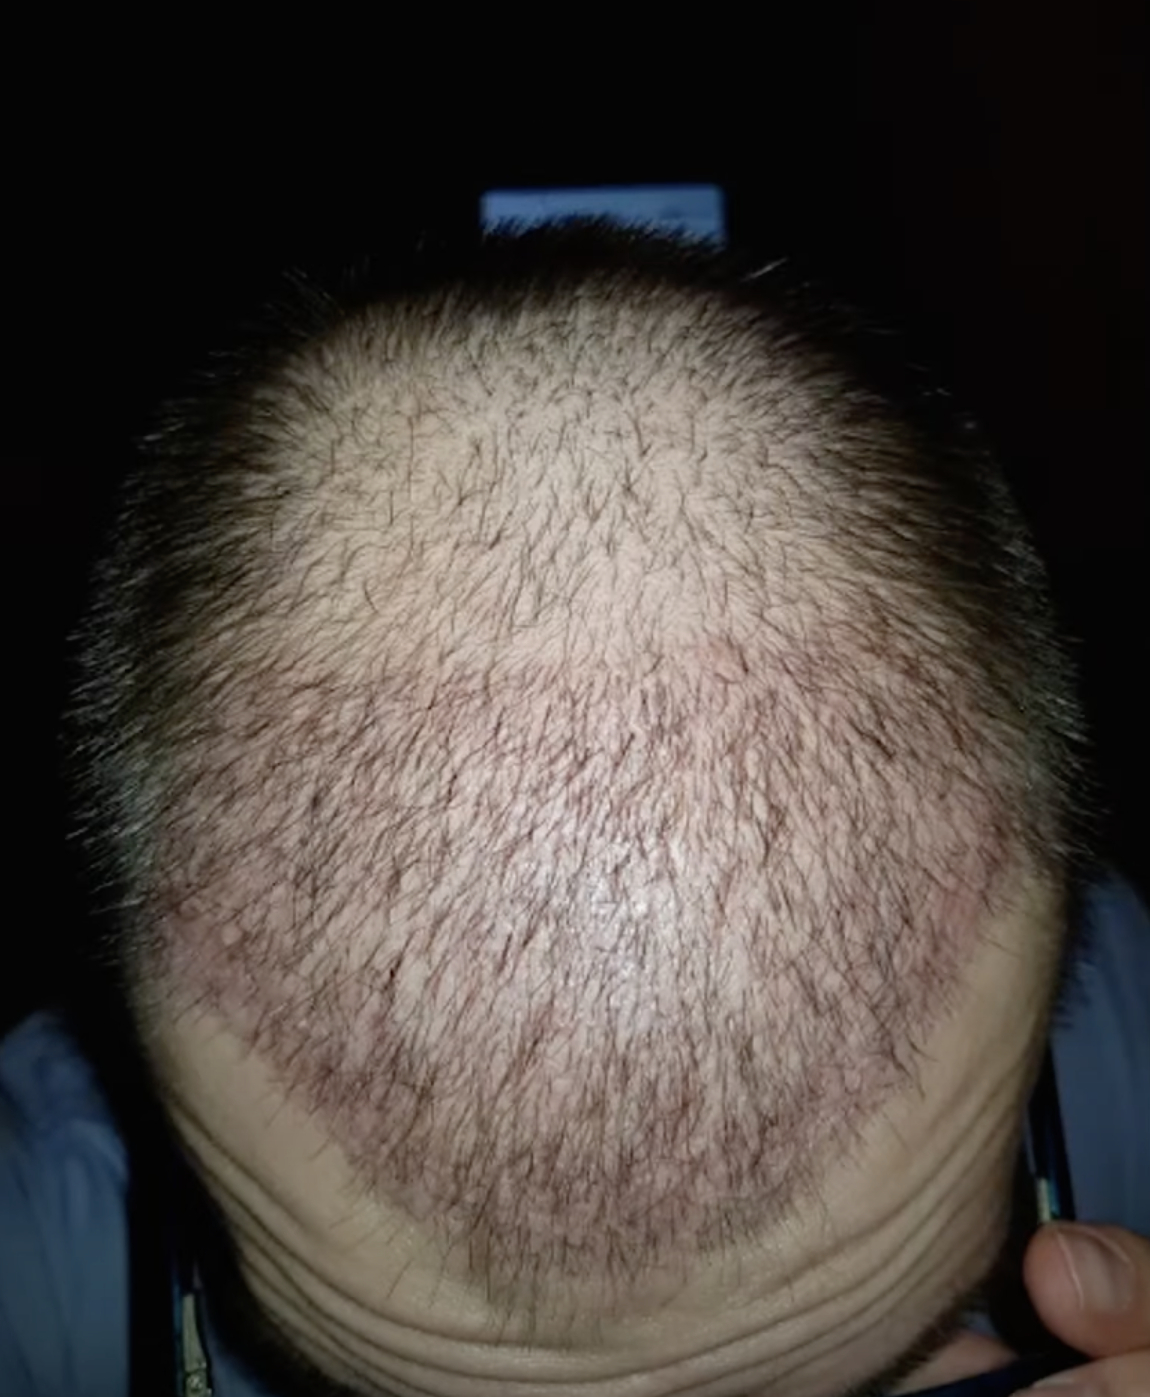 Light hair transplant shedding on day 24 post-FUE